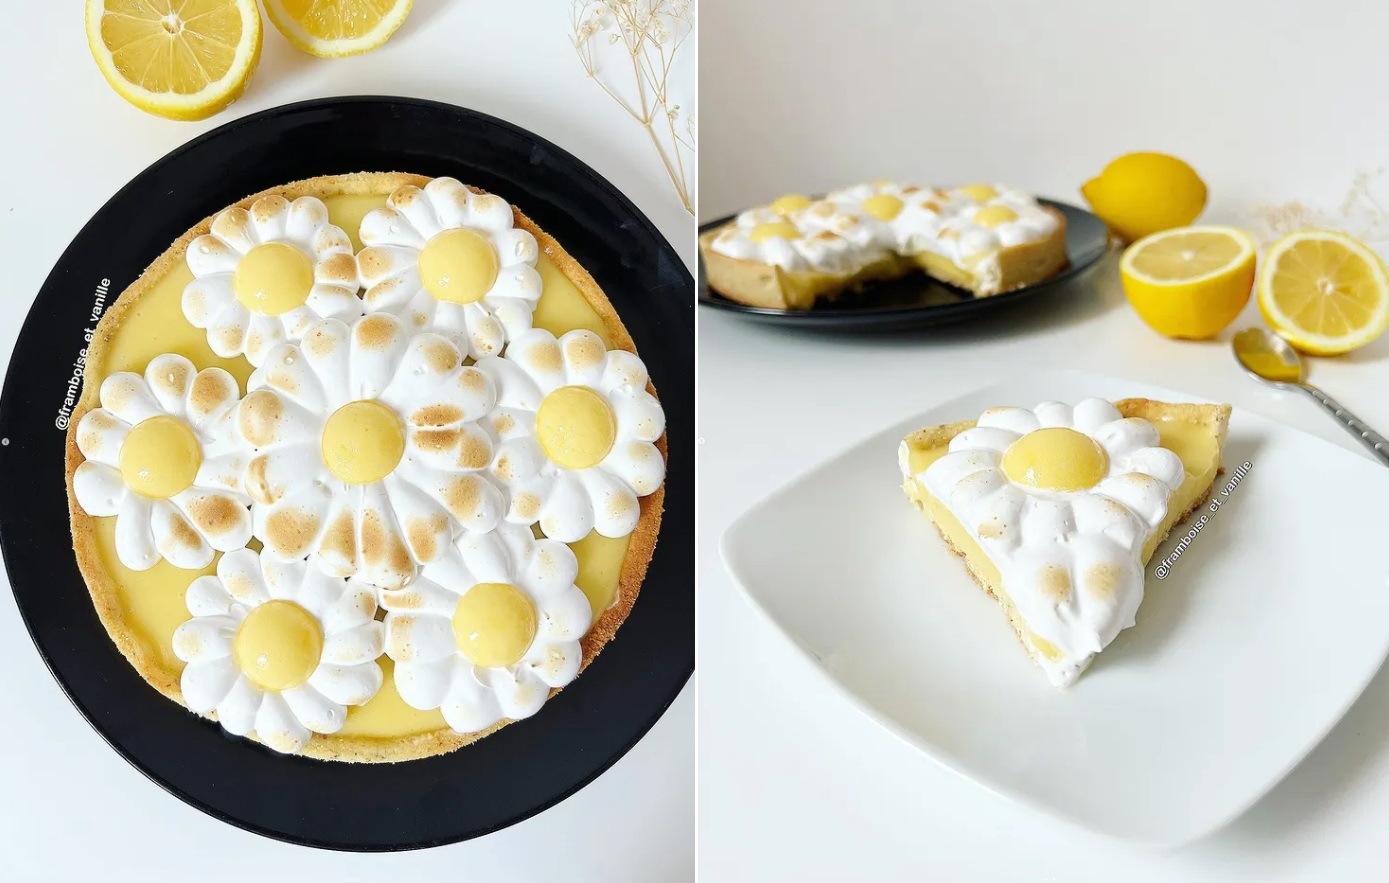 La recette de tarte au citron meringuée maison facile